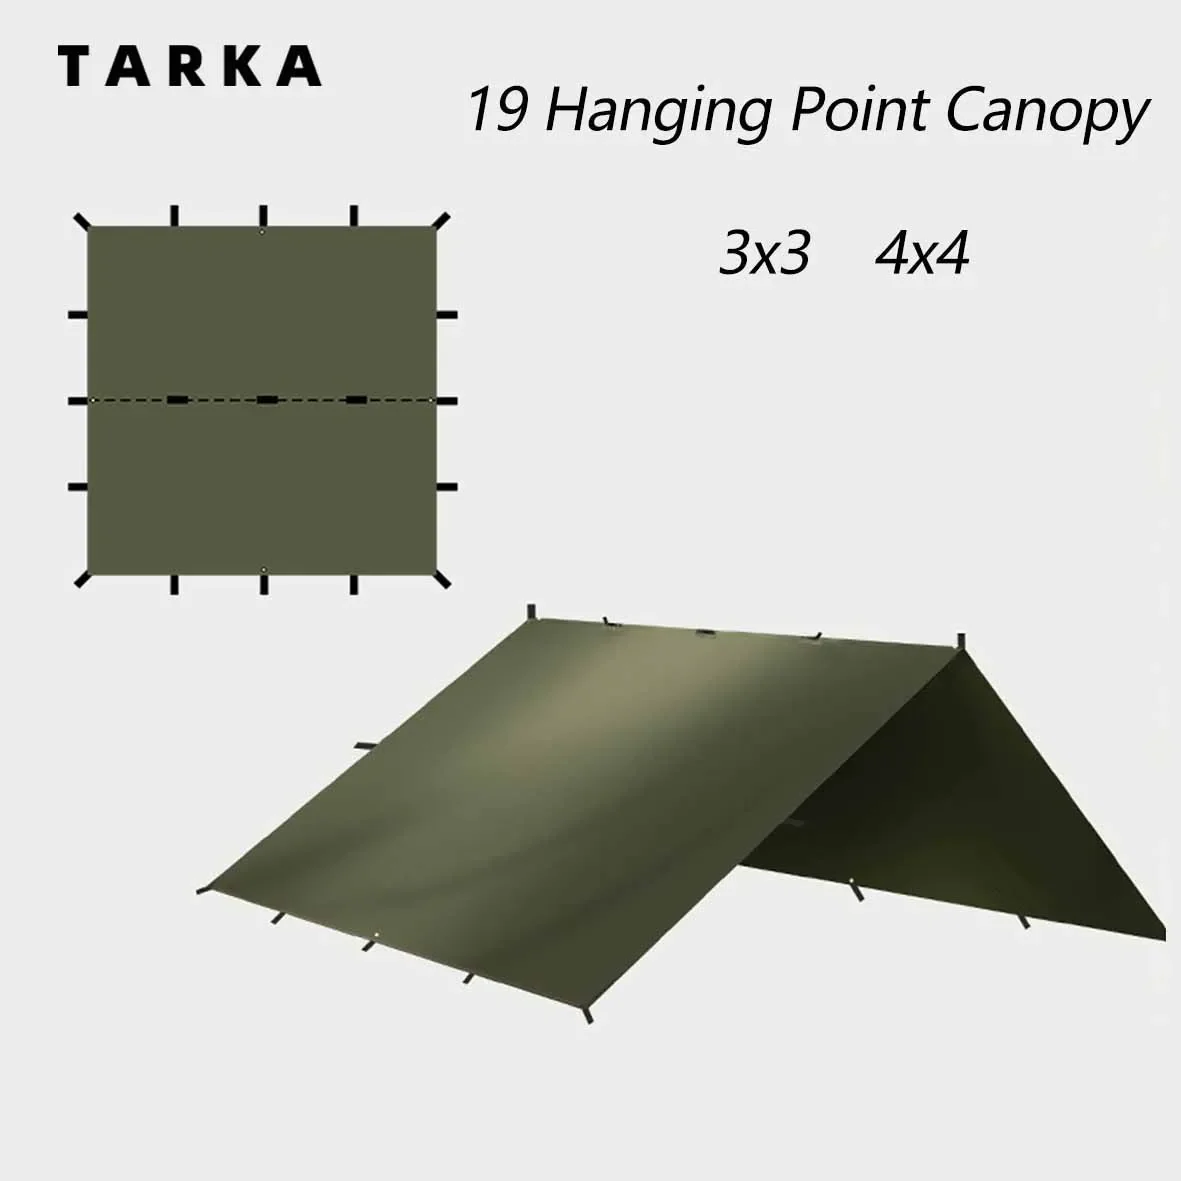 TARKA-tienda de campaña para exteriores, toldo impermeable de supervivencia, refugio solar turístico, 4x4m/4x3m/3x3m